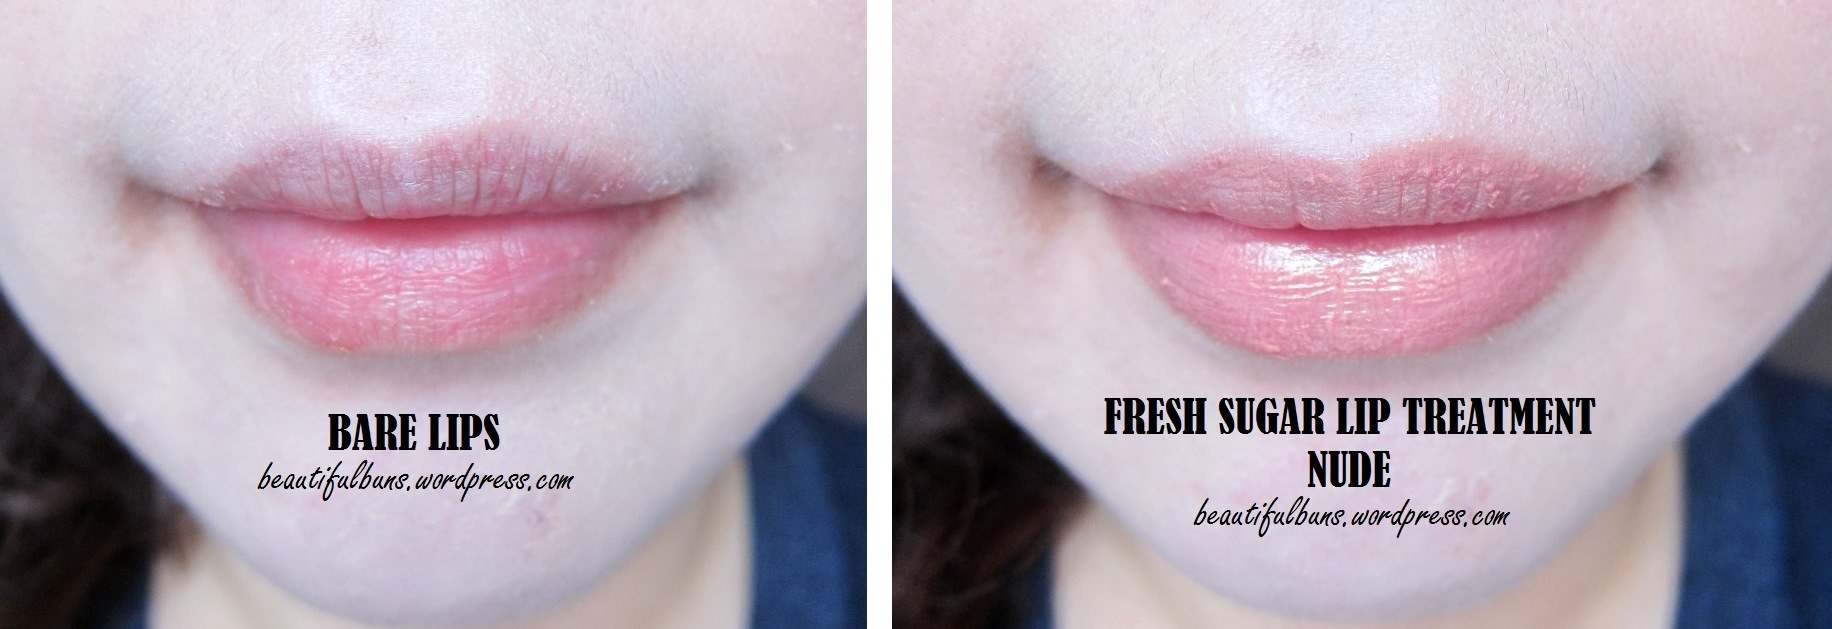 fresh sugar lip treatment nude 7